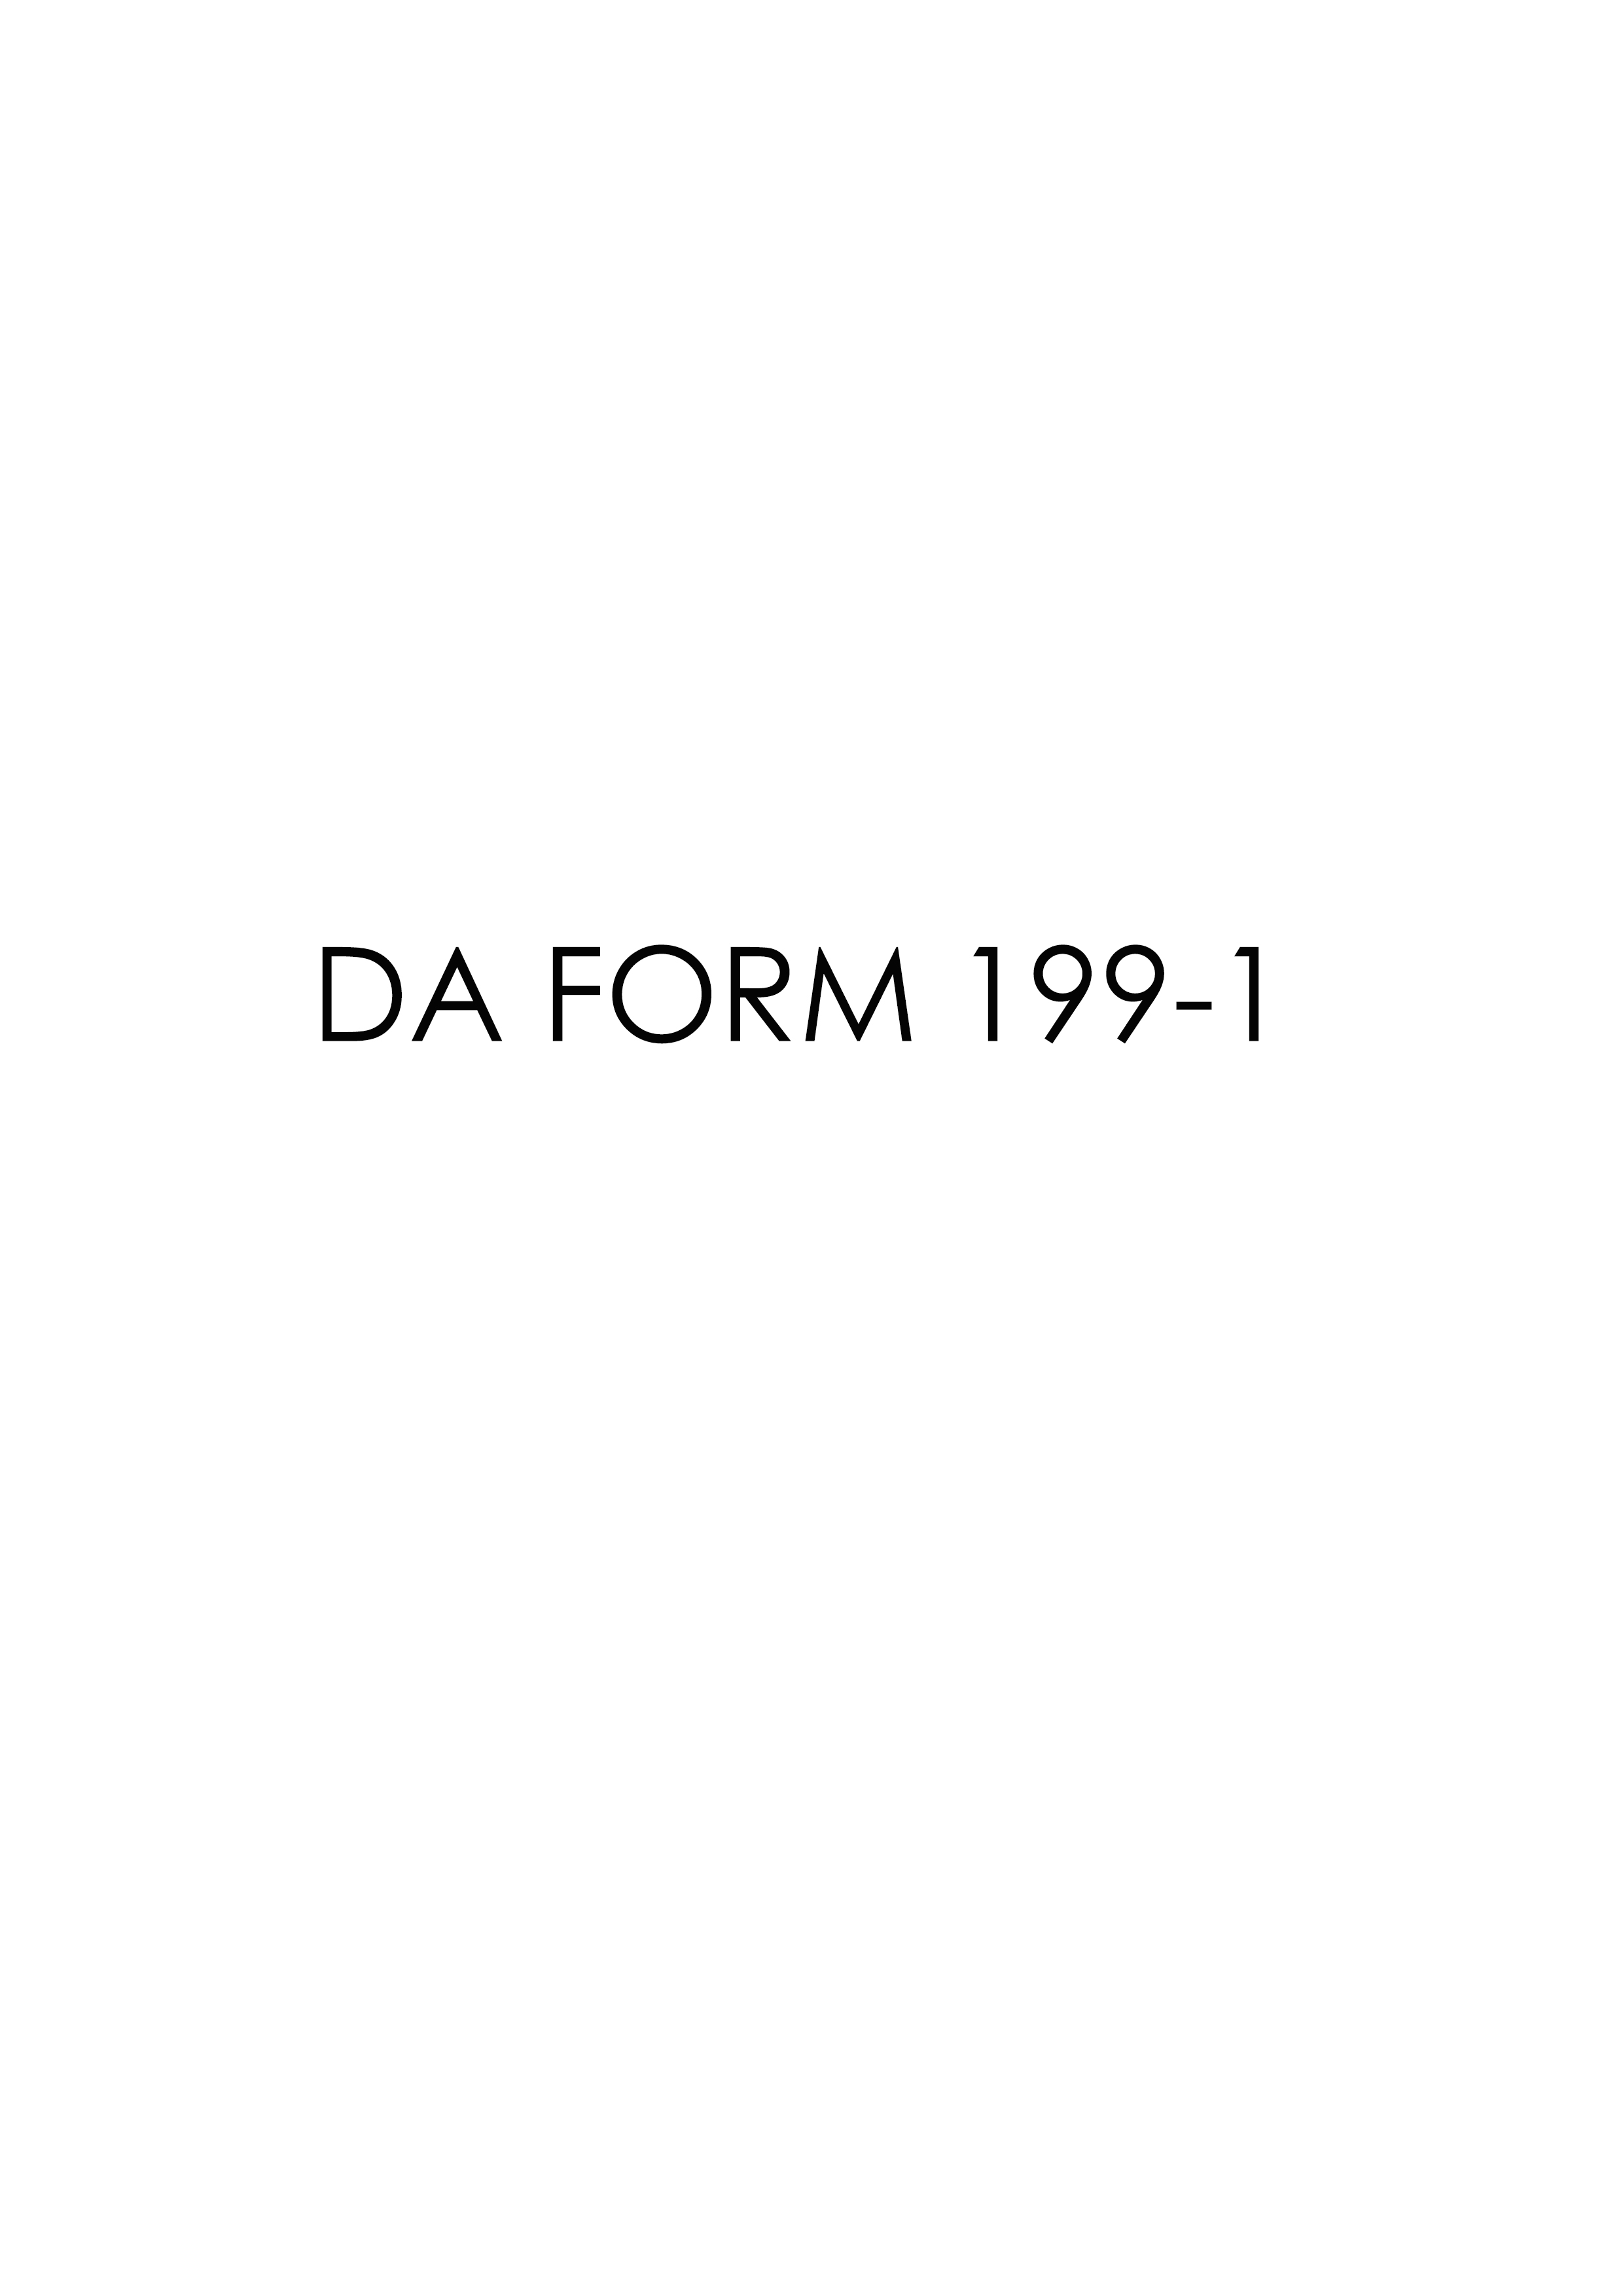 da Form 199-1 fillable